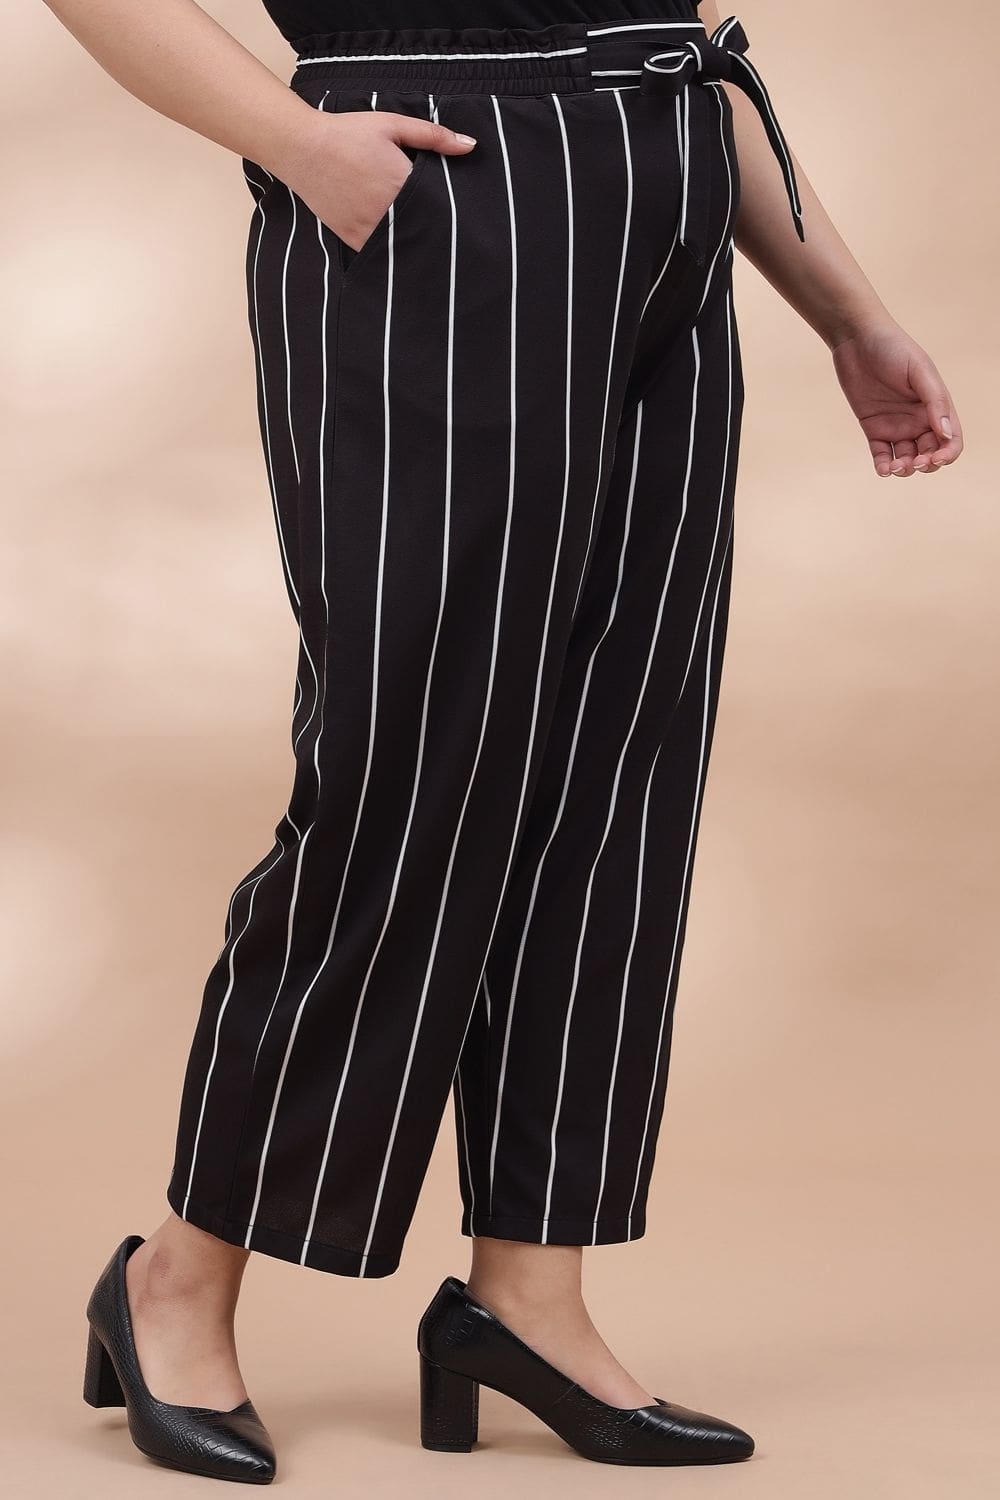 Comfortable Black White Striped Pants